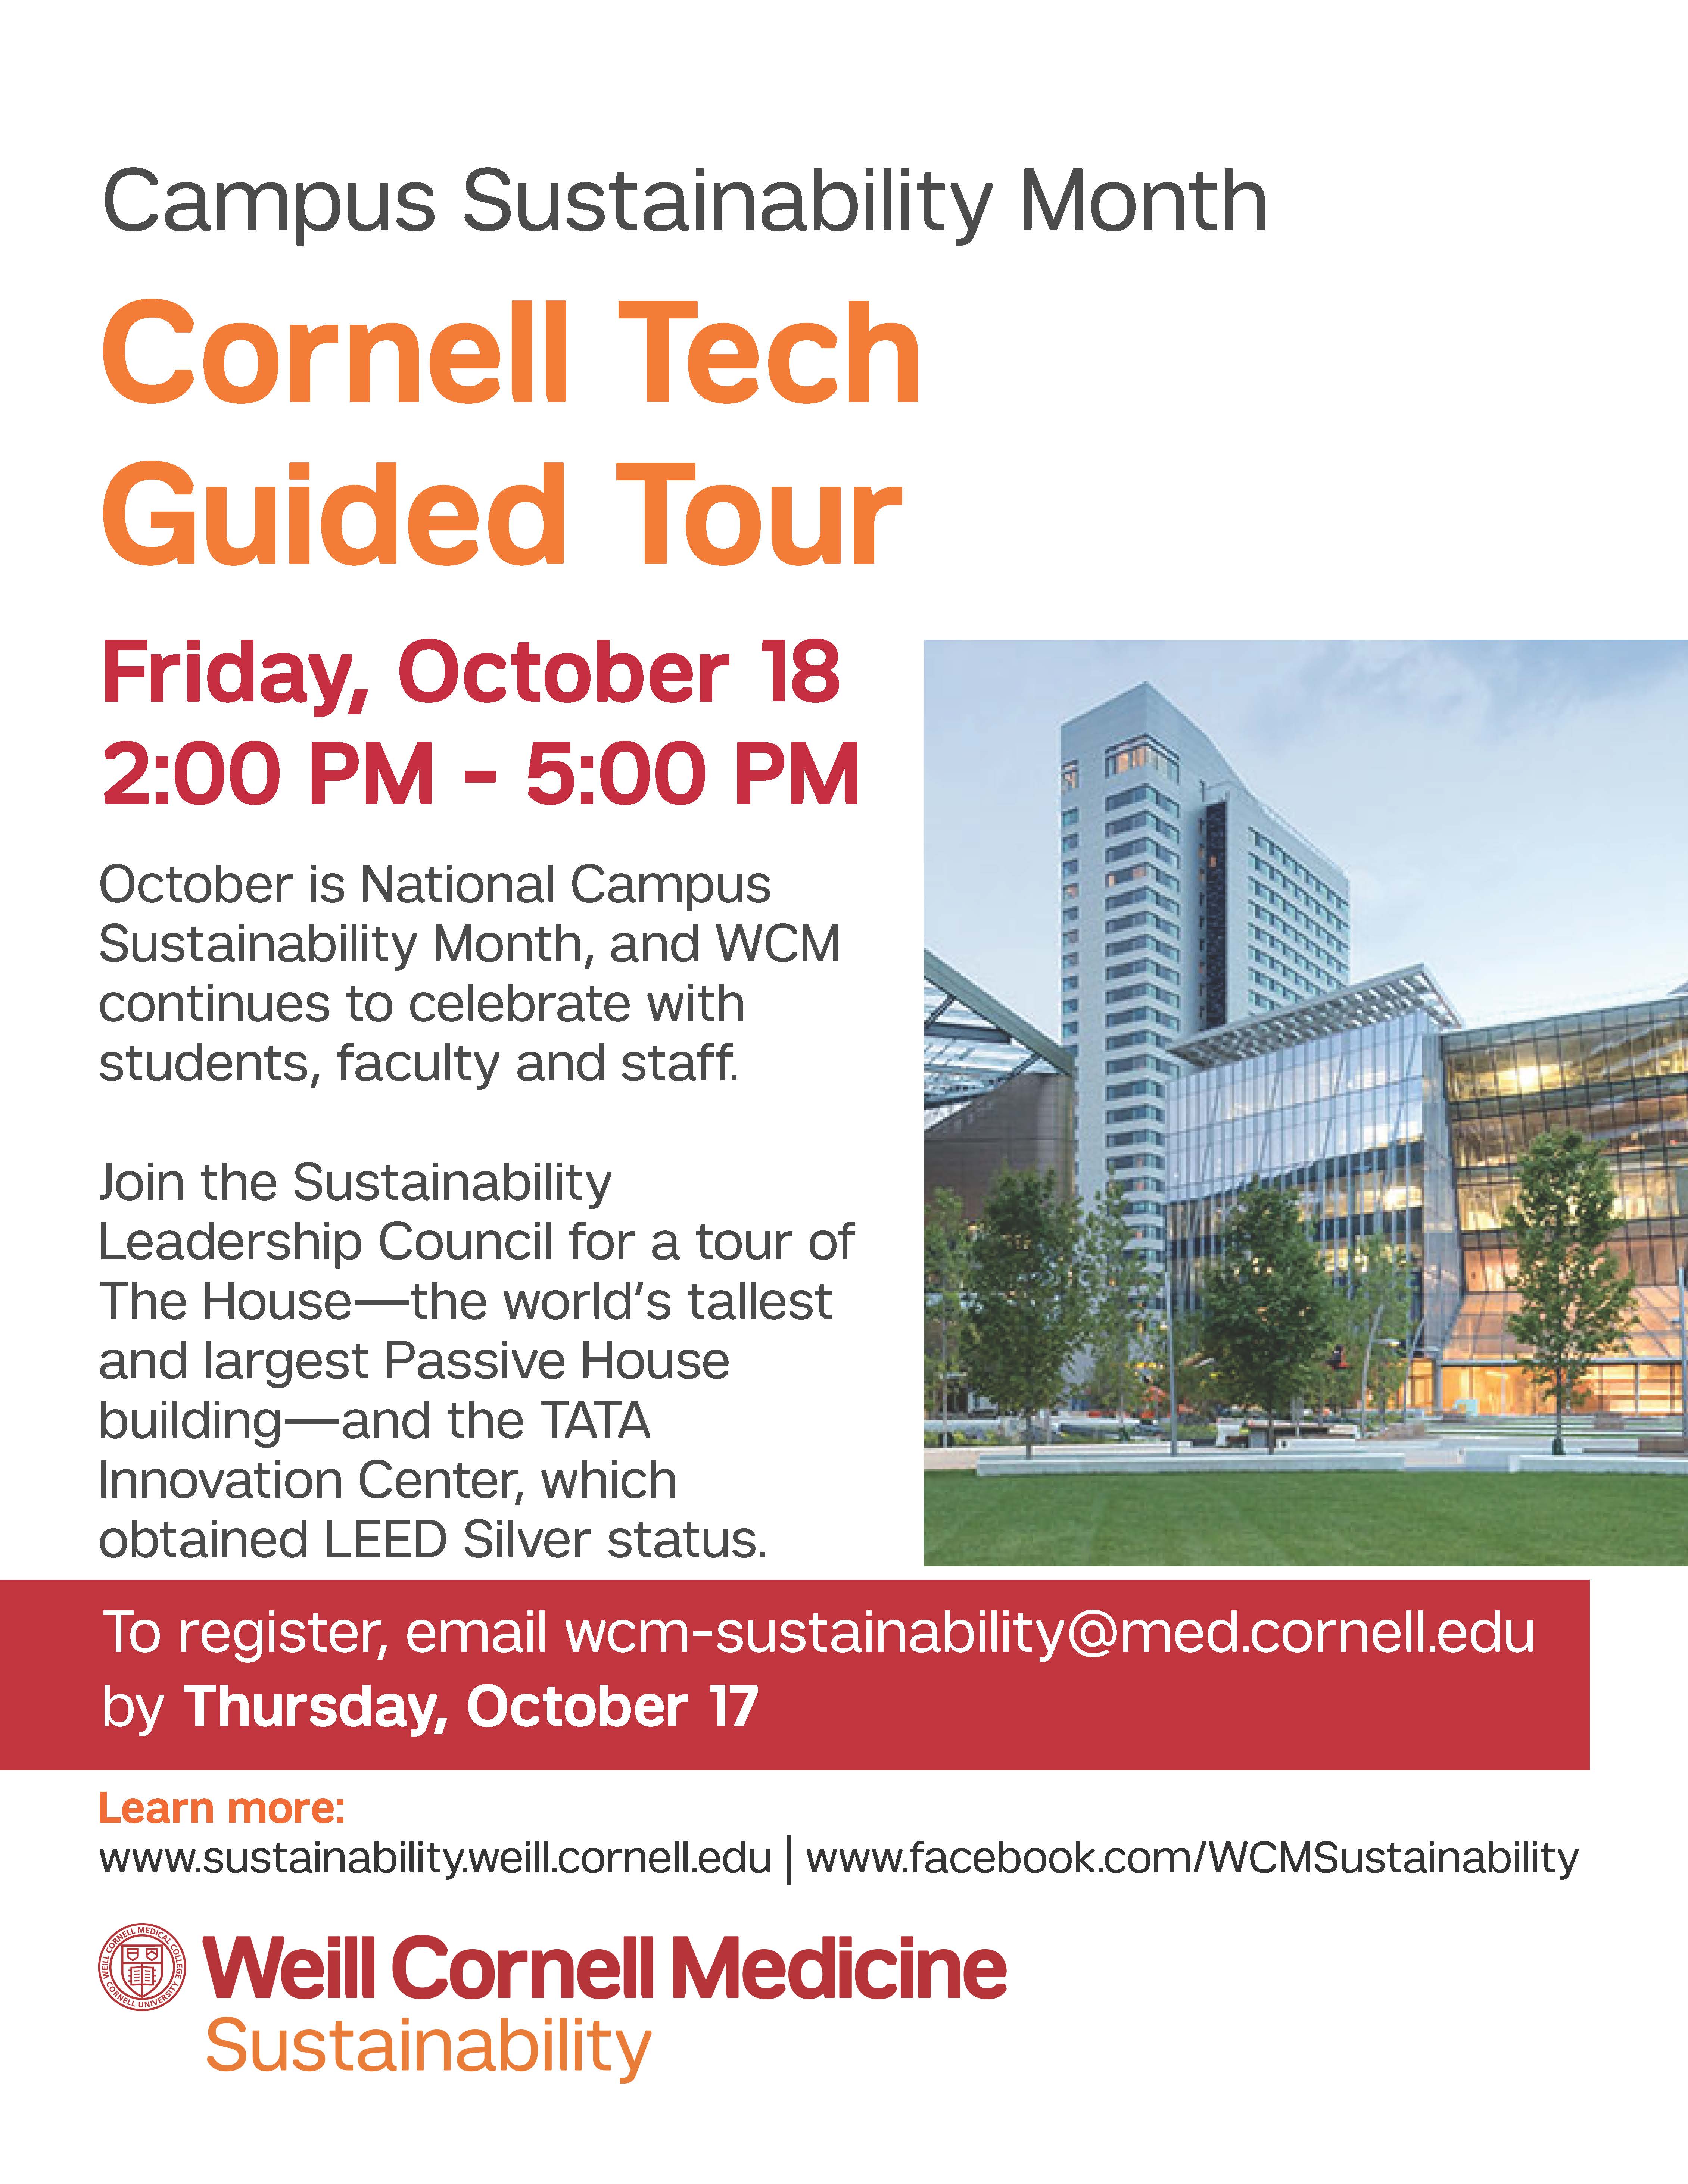 Cornell Tech Tour Poster